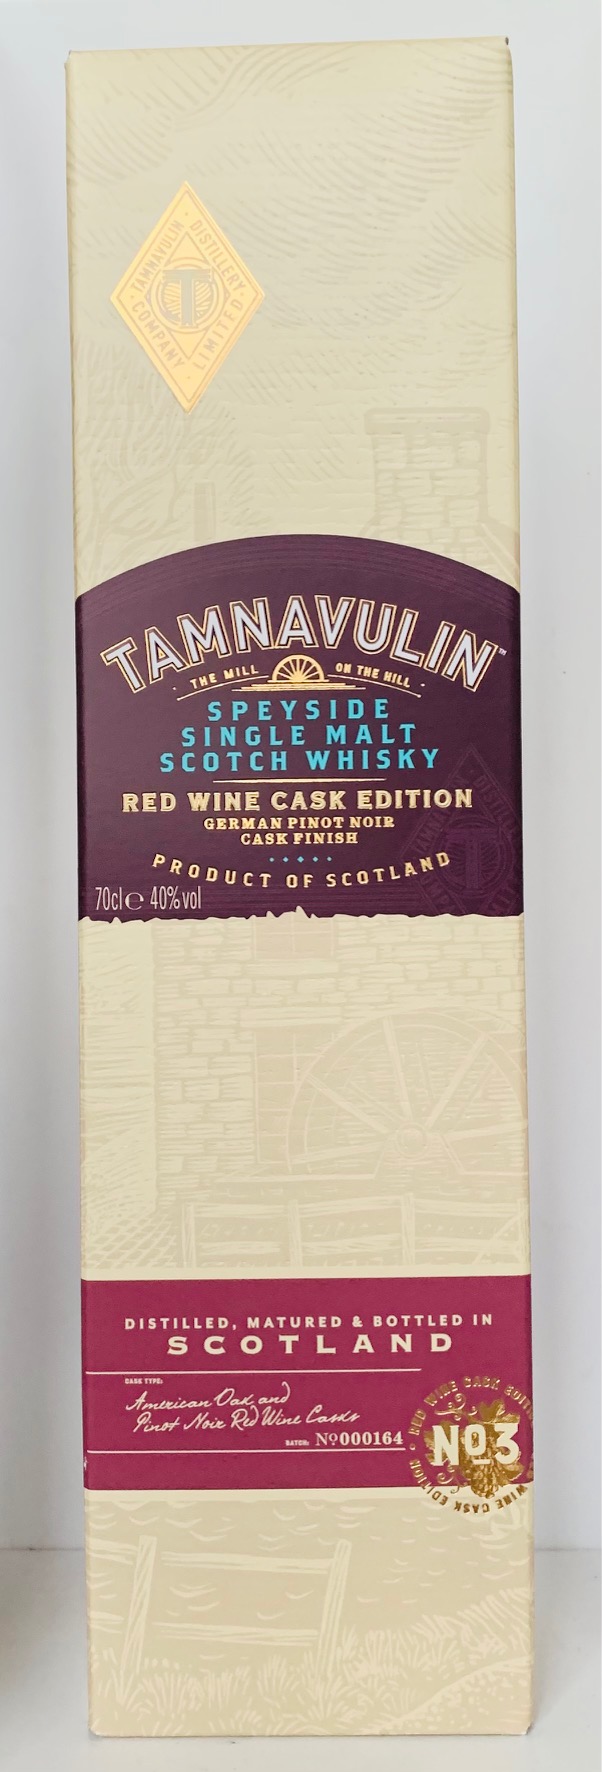 Tamnavulin Red Wine Cask Edition No.3 German Pinot Noir Cask Finish